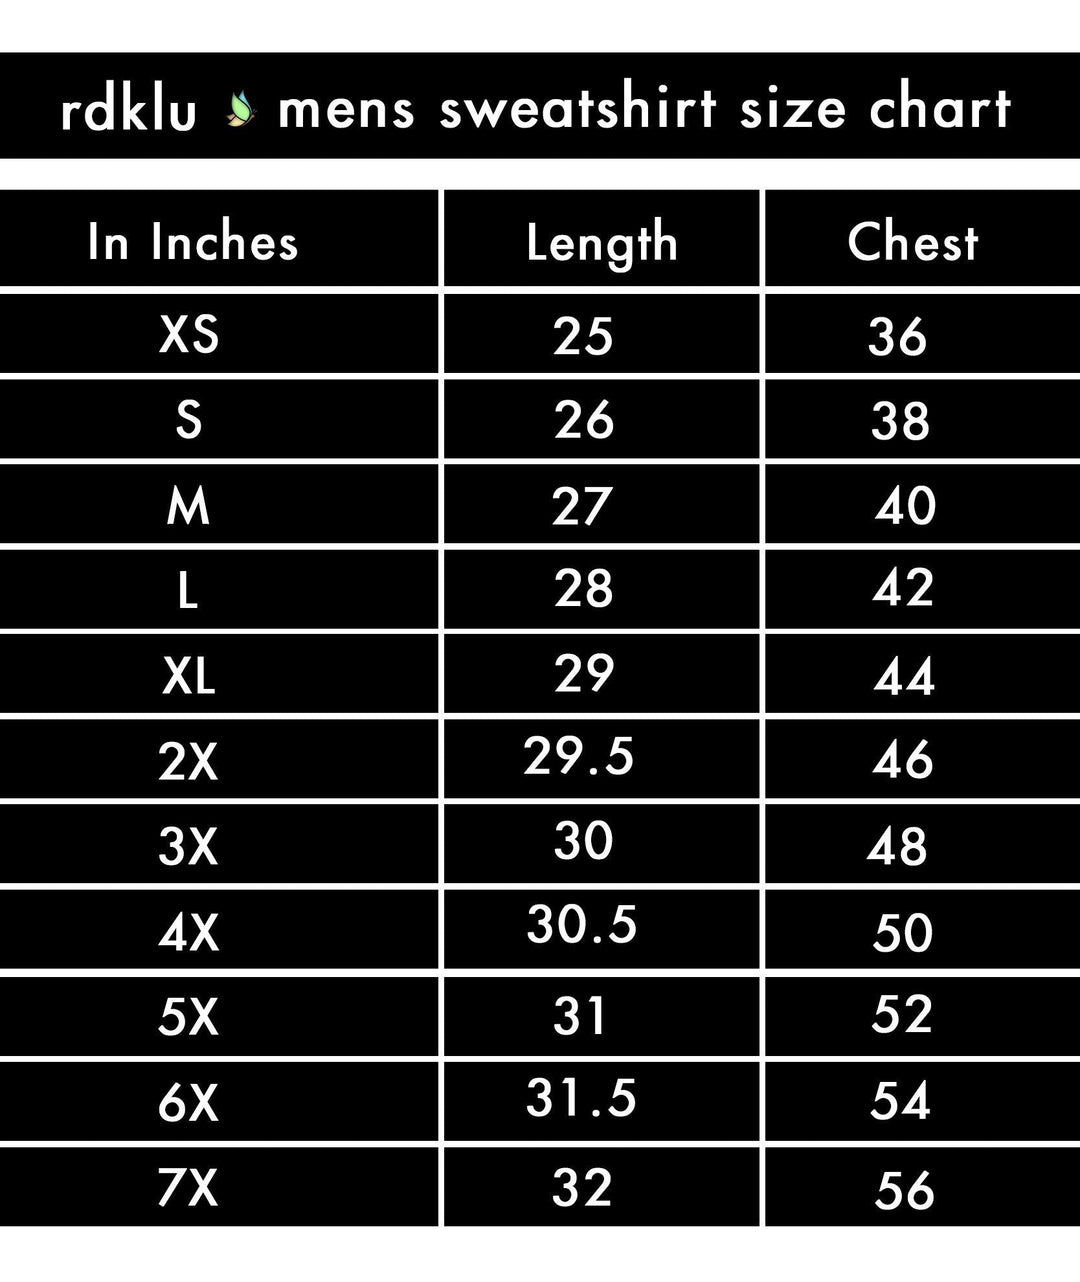 RDKLU MENS SWEATSHIRT - RDKL - Men's Sweatshirt#118